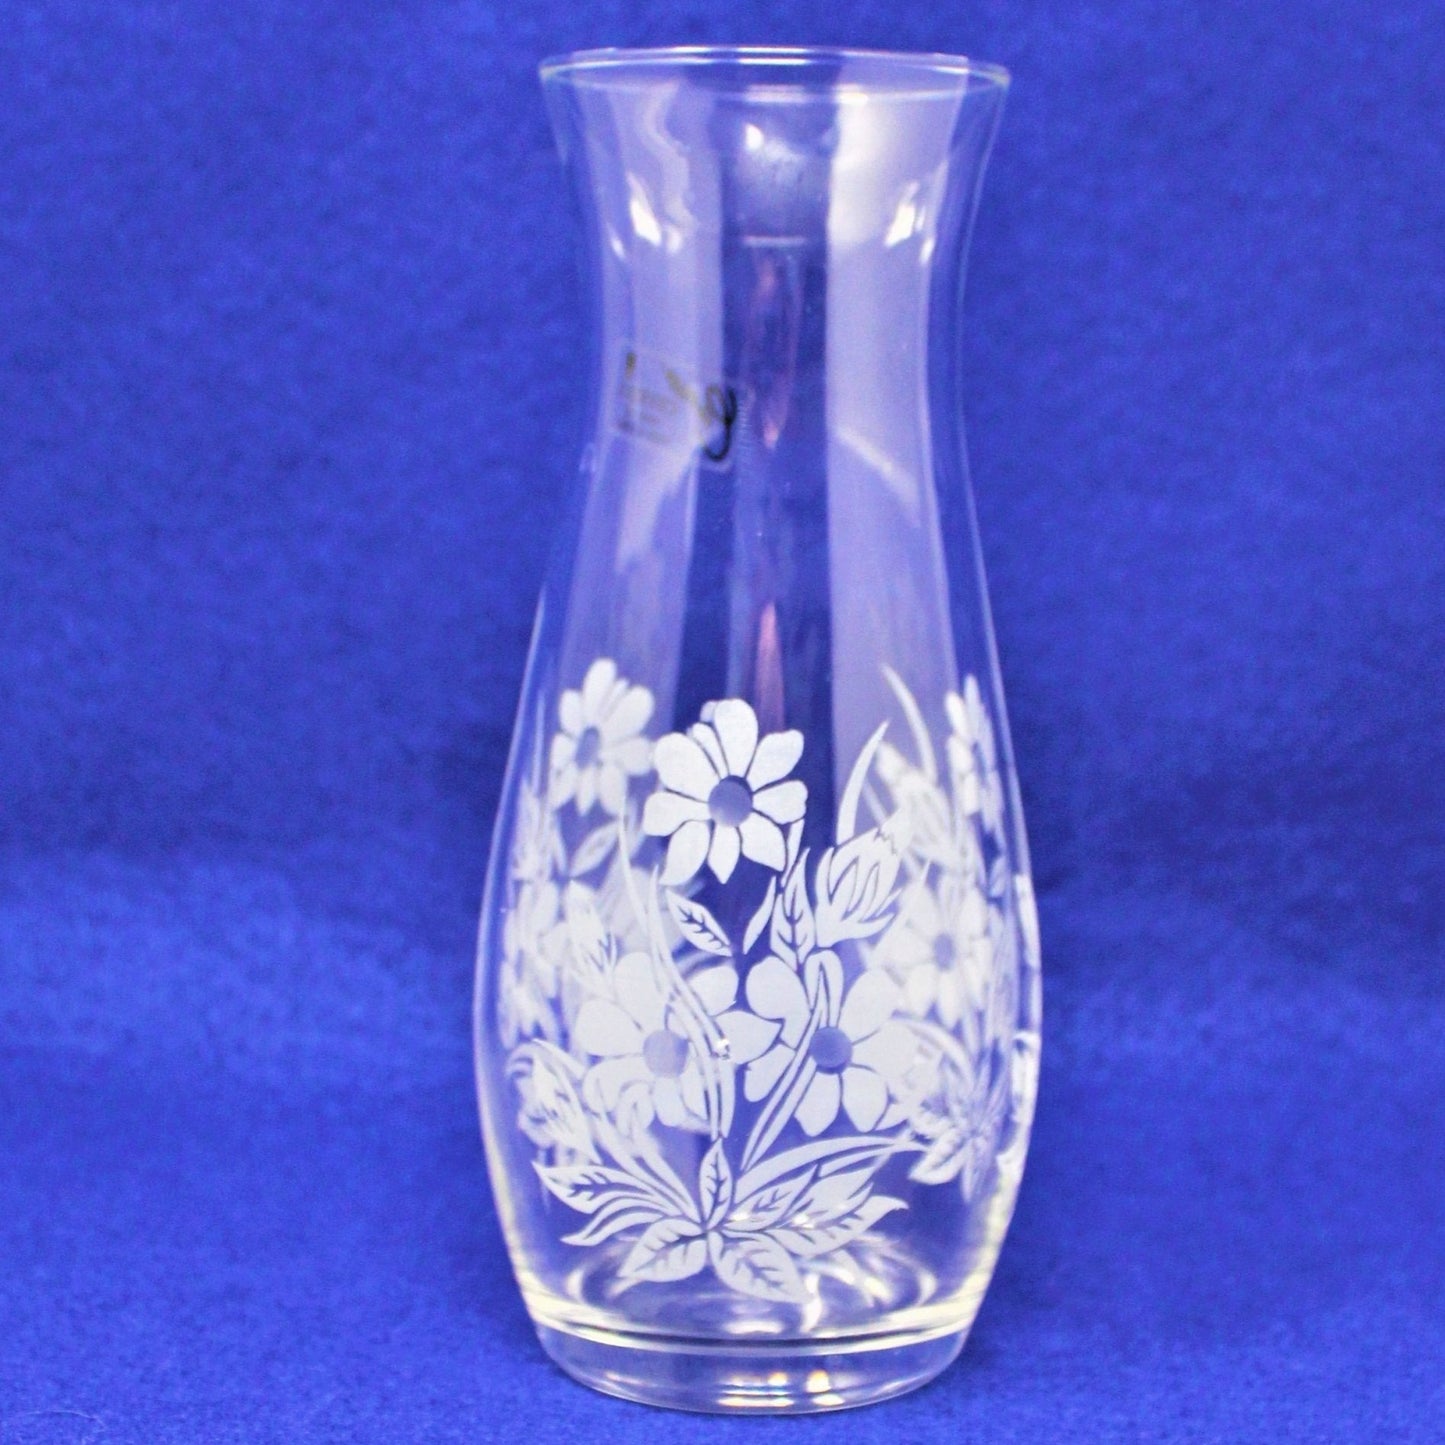 Bud Vase, Cameo Crystal, Floral, Hand Cut, Vintage